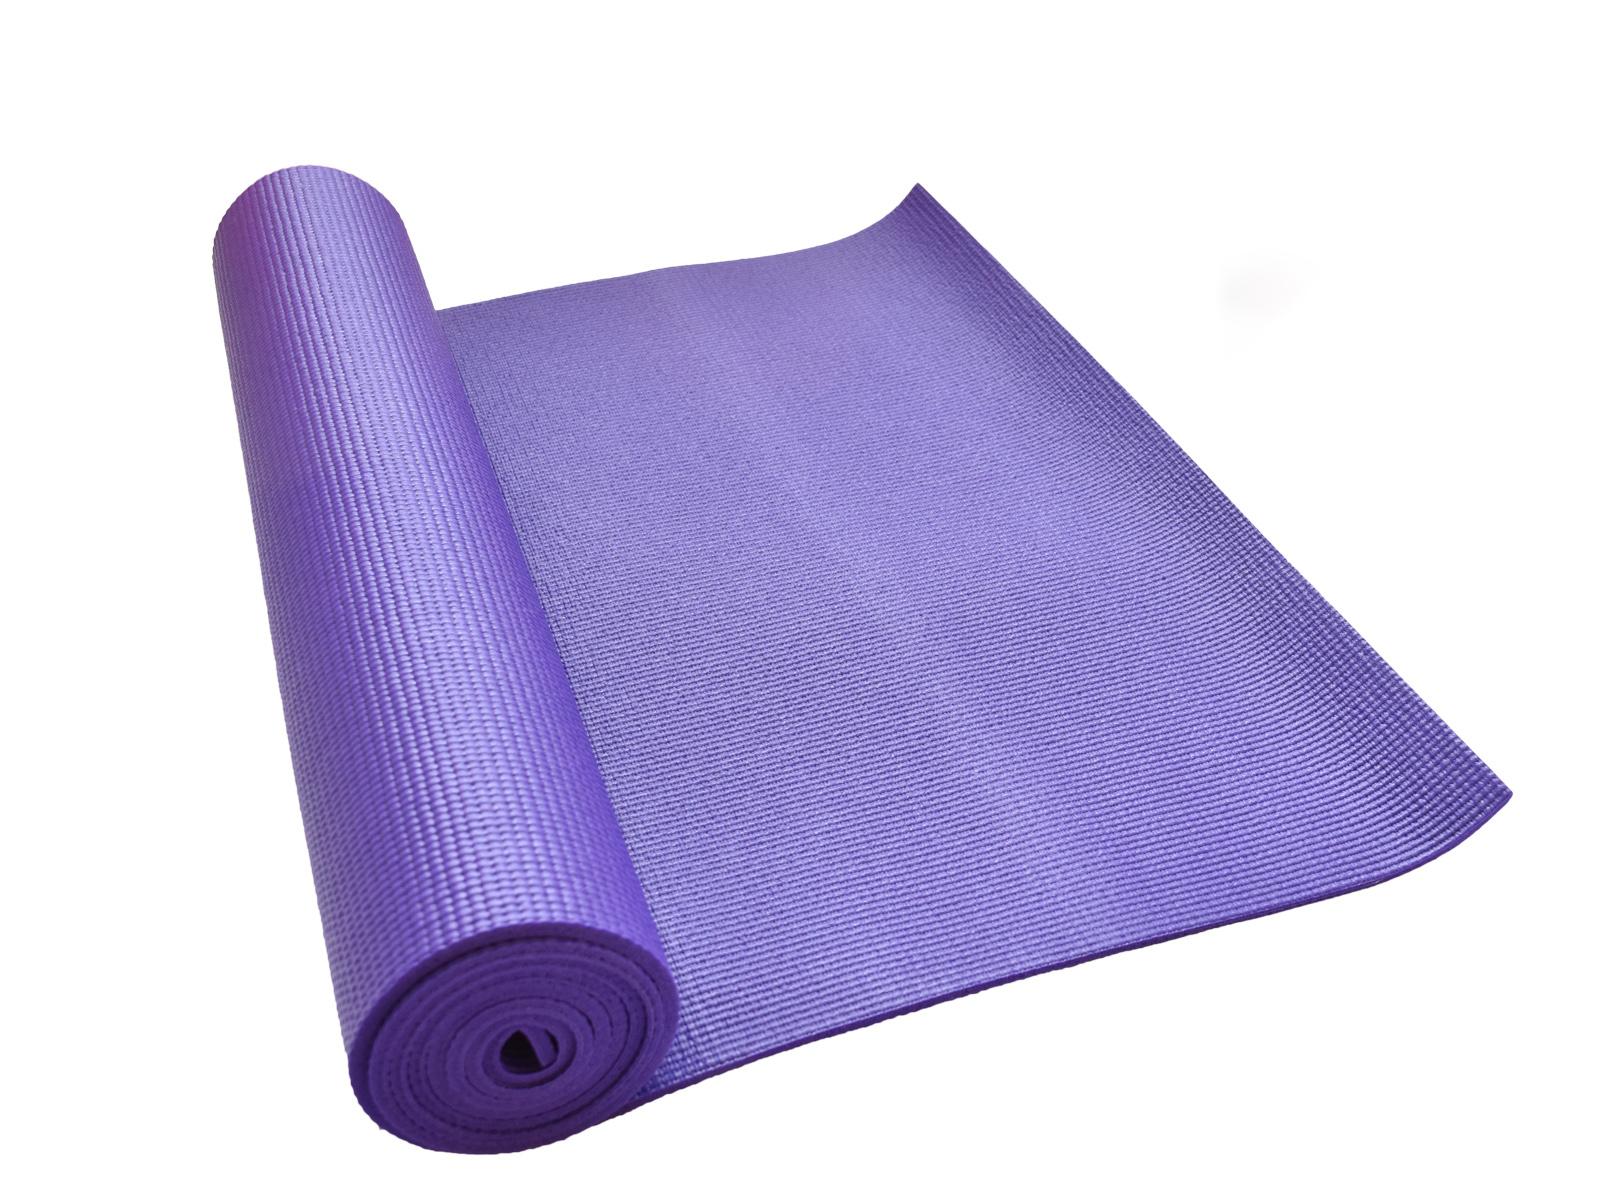 Yoga Pilates 6mm thick standard mat purple